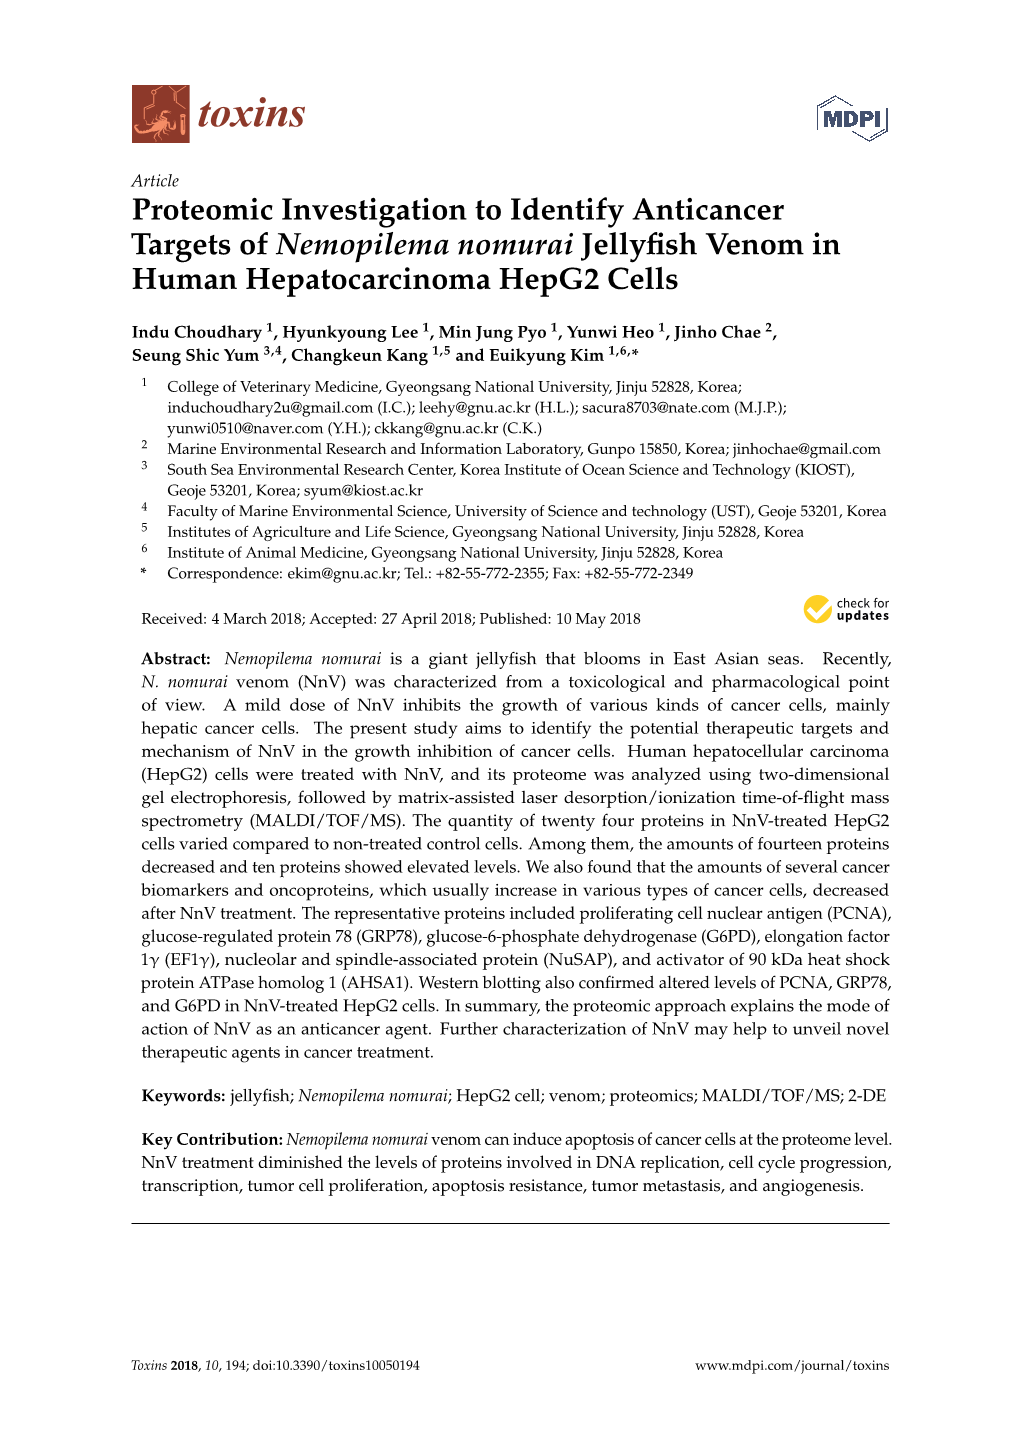 Proteomic Investigation to Identify Anticancer Targets of Nemopilema Nomurai Jellyﬁsh Venom in Human Hepatocarcinoma Hepg2 Cells